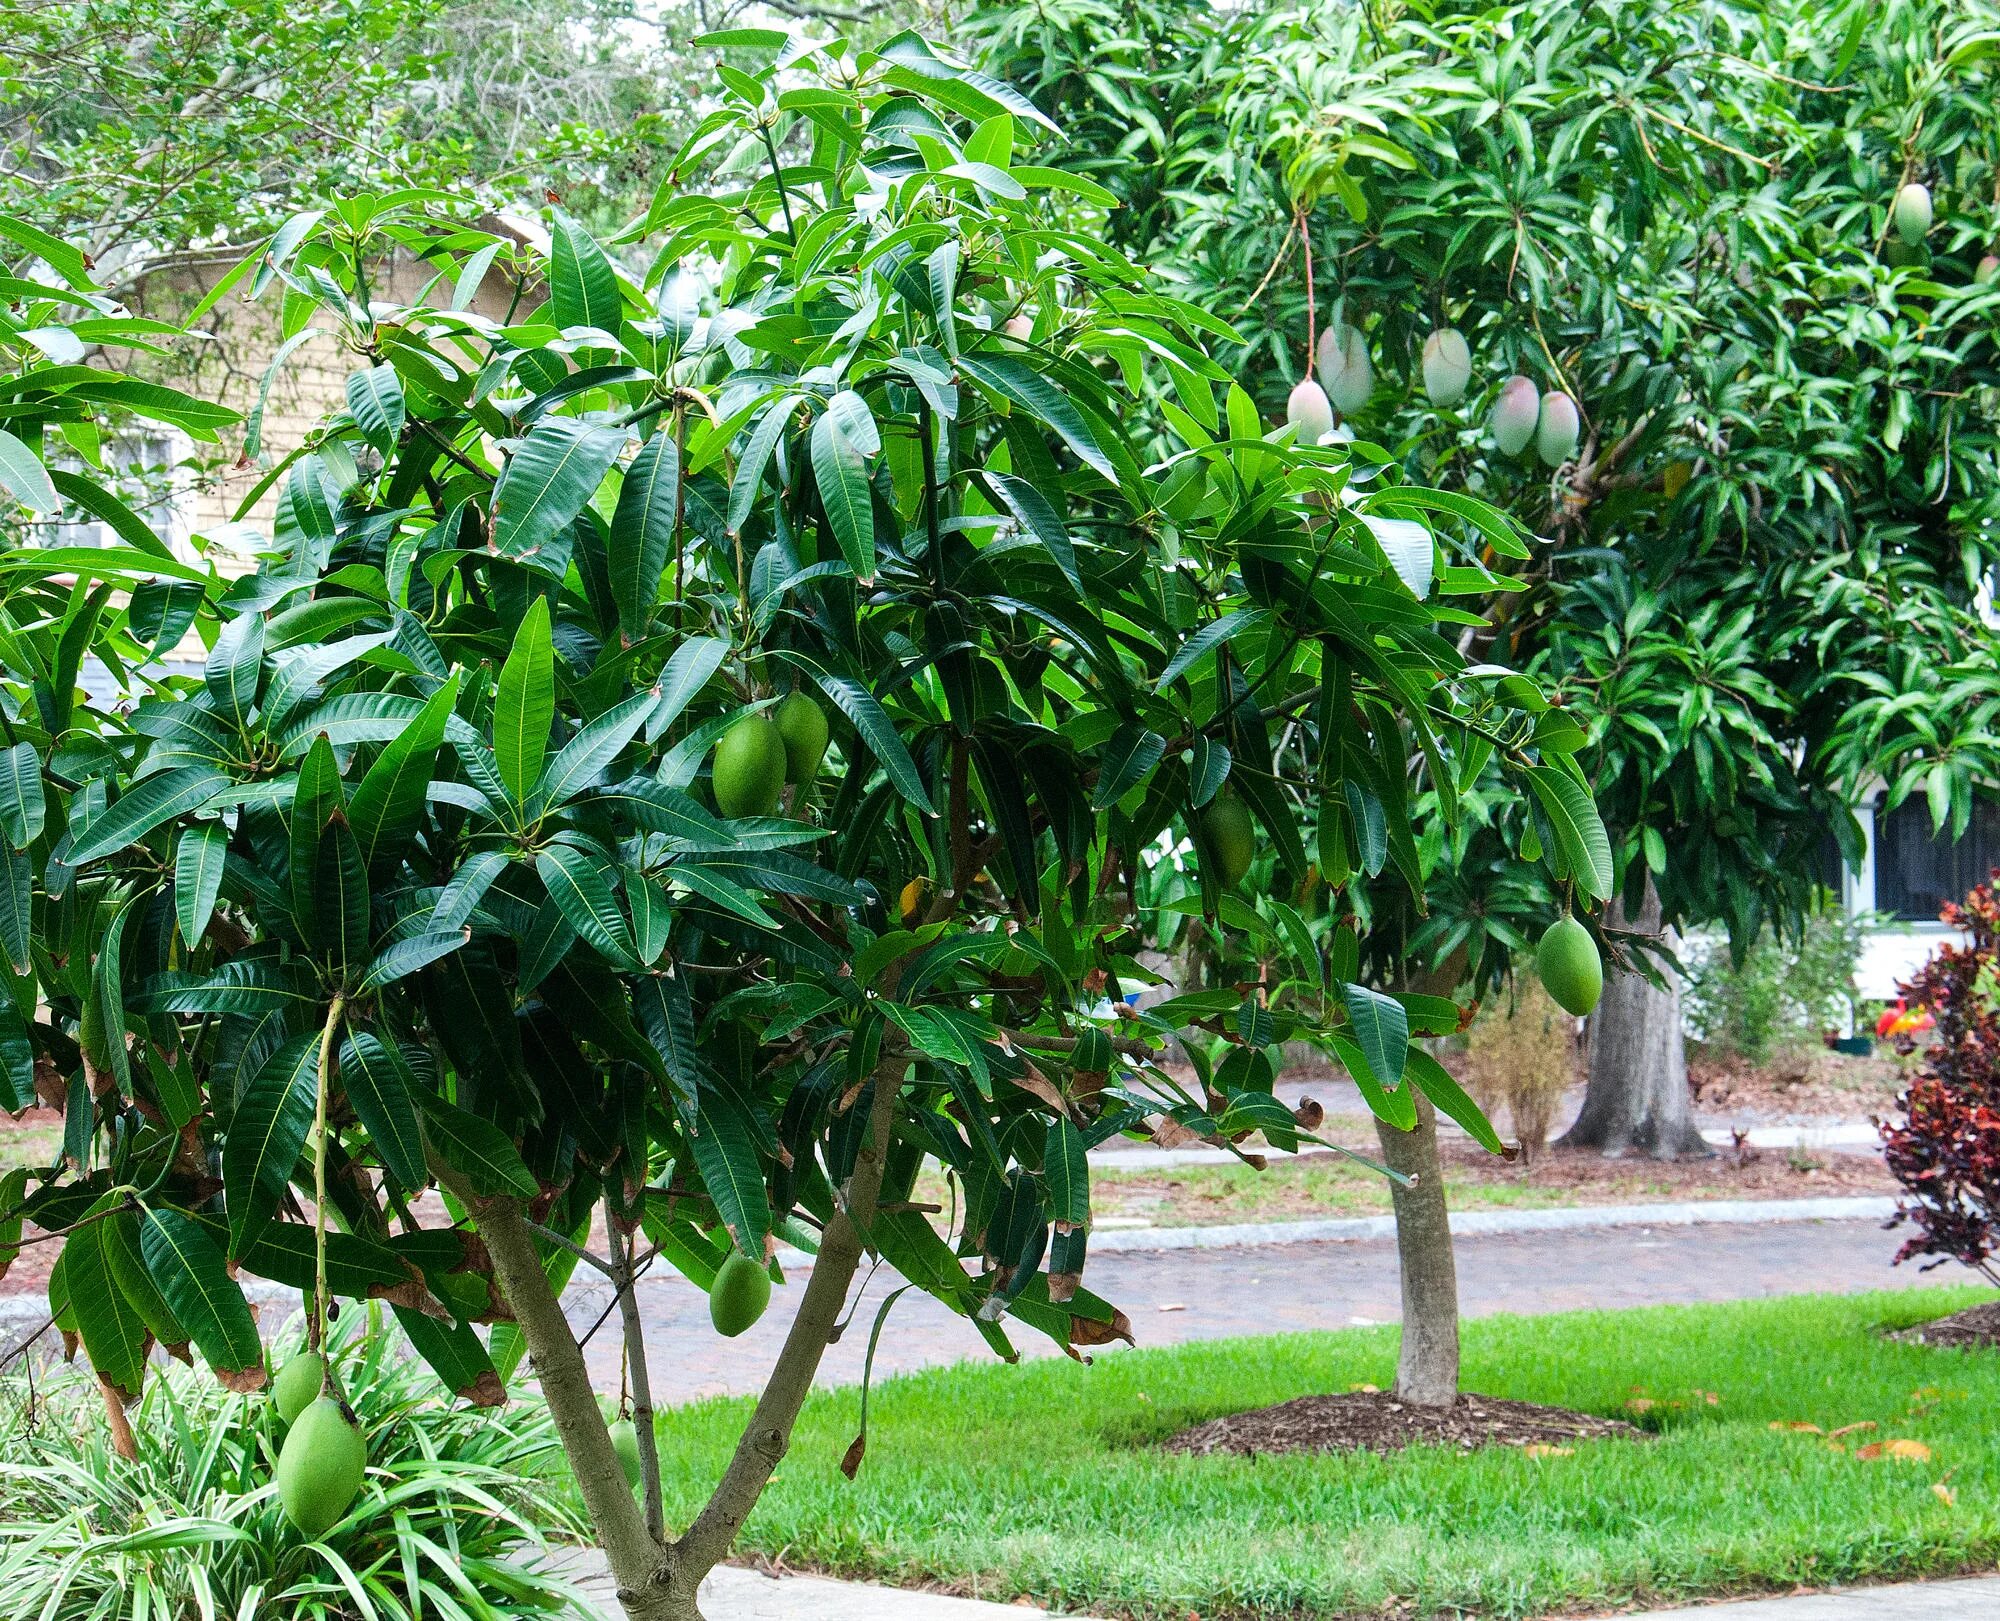 Манго дерево цветет. Манго растение. Манго дерево в дикой природе. Манго индийское растение. Манговое дерево с манго.